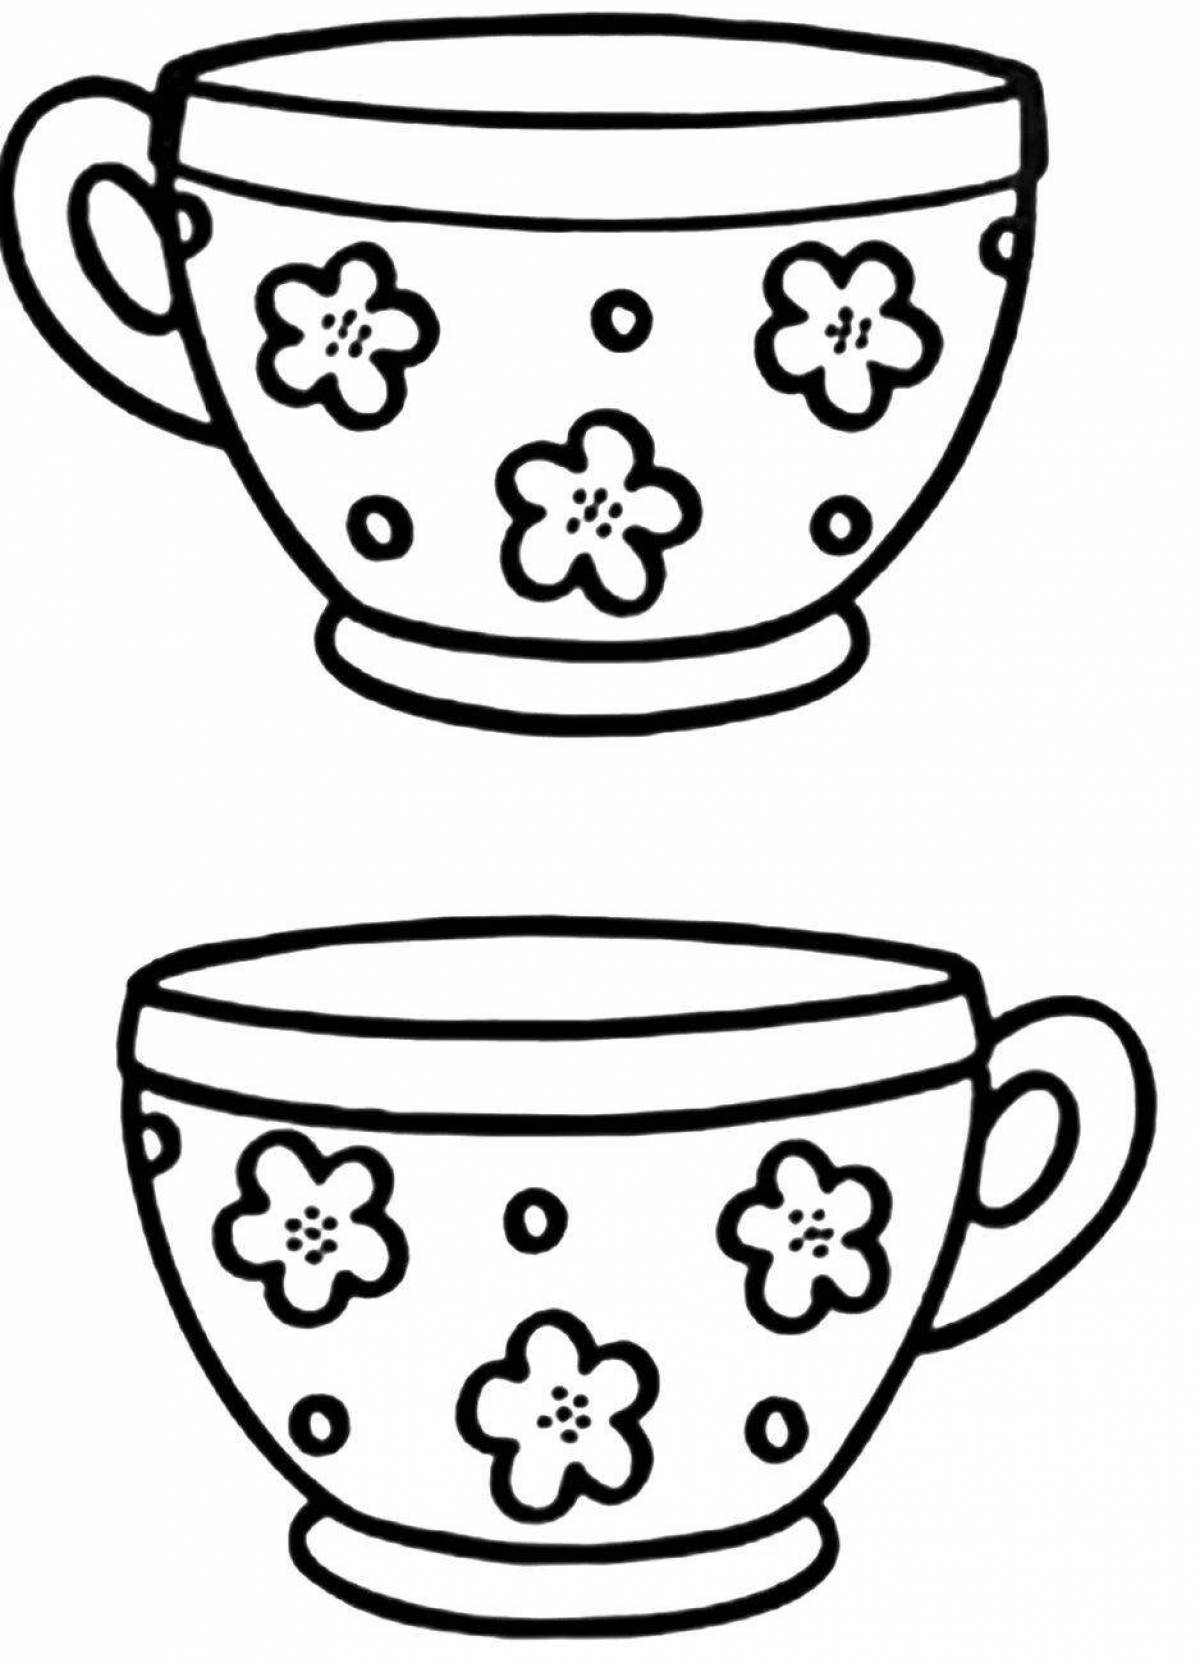 Humorous polka dot mug coloring book